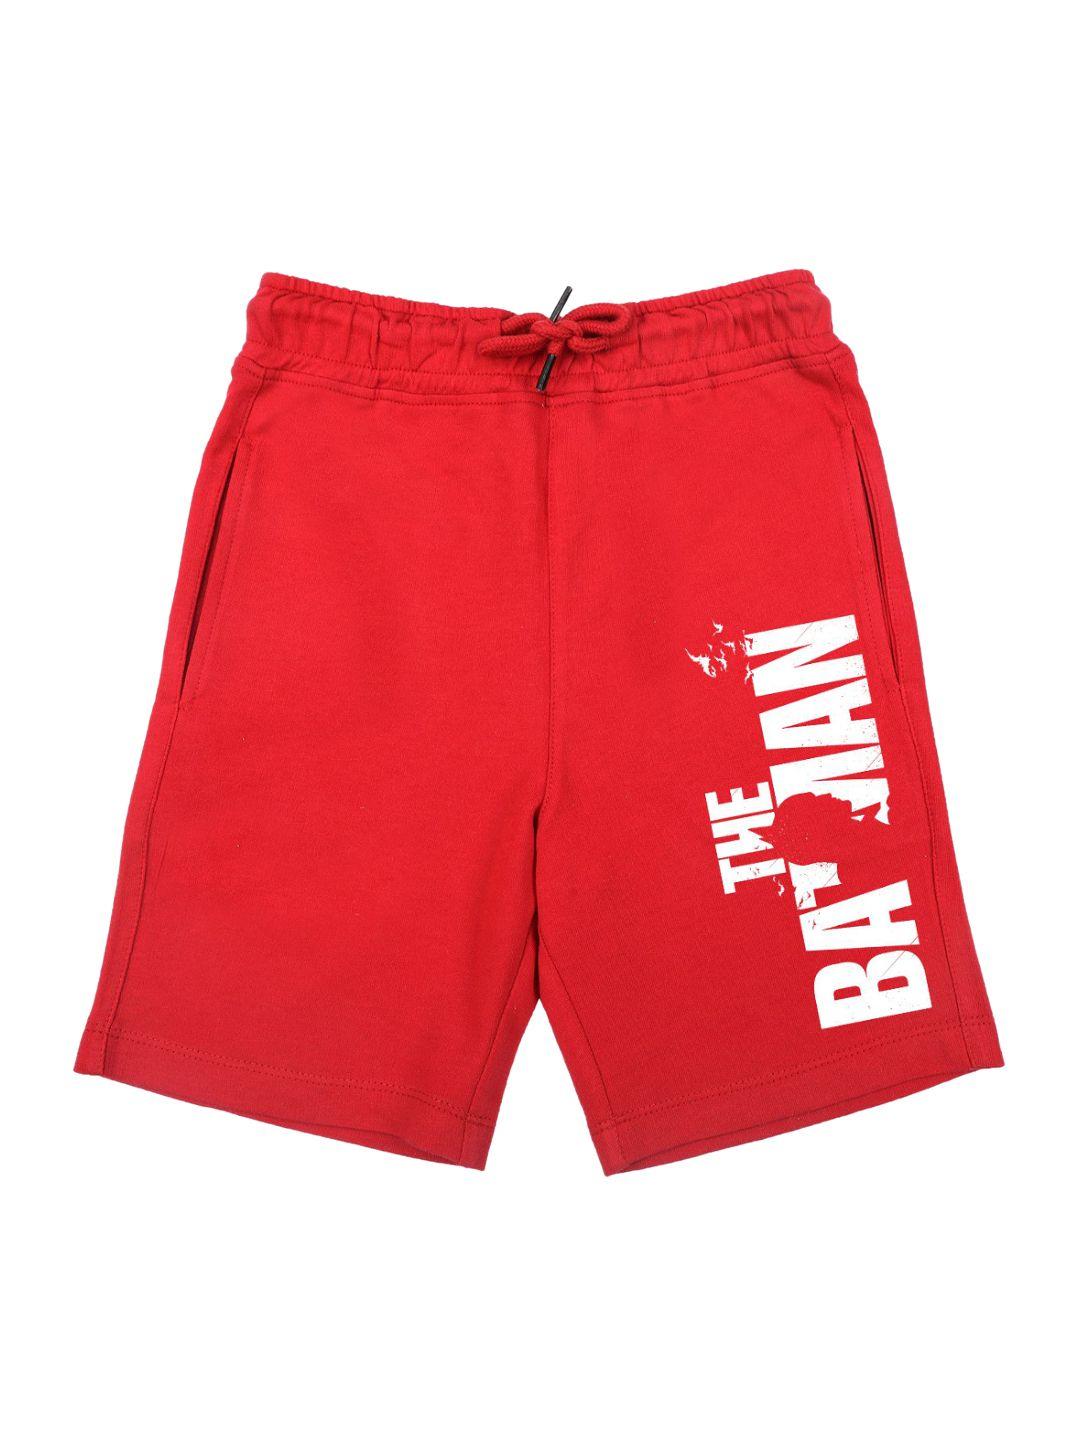 dc-by-wear-your-mind-boys-red-batman-shorts